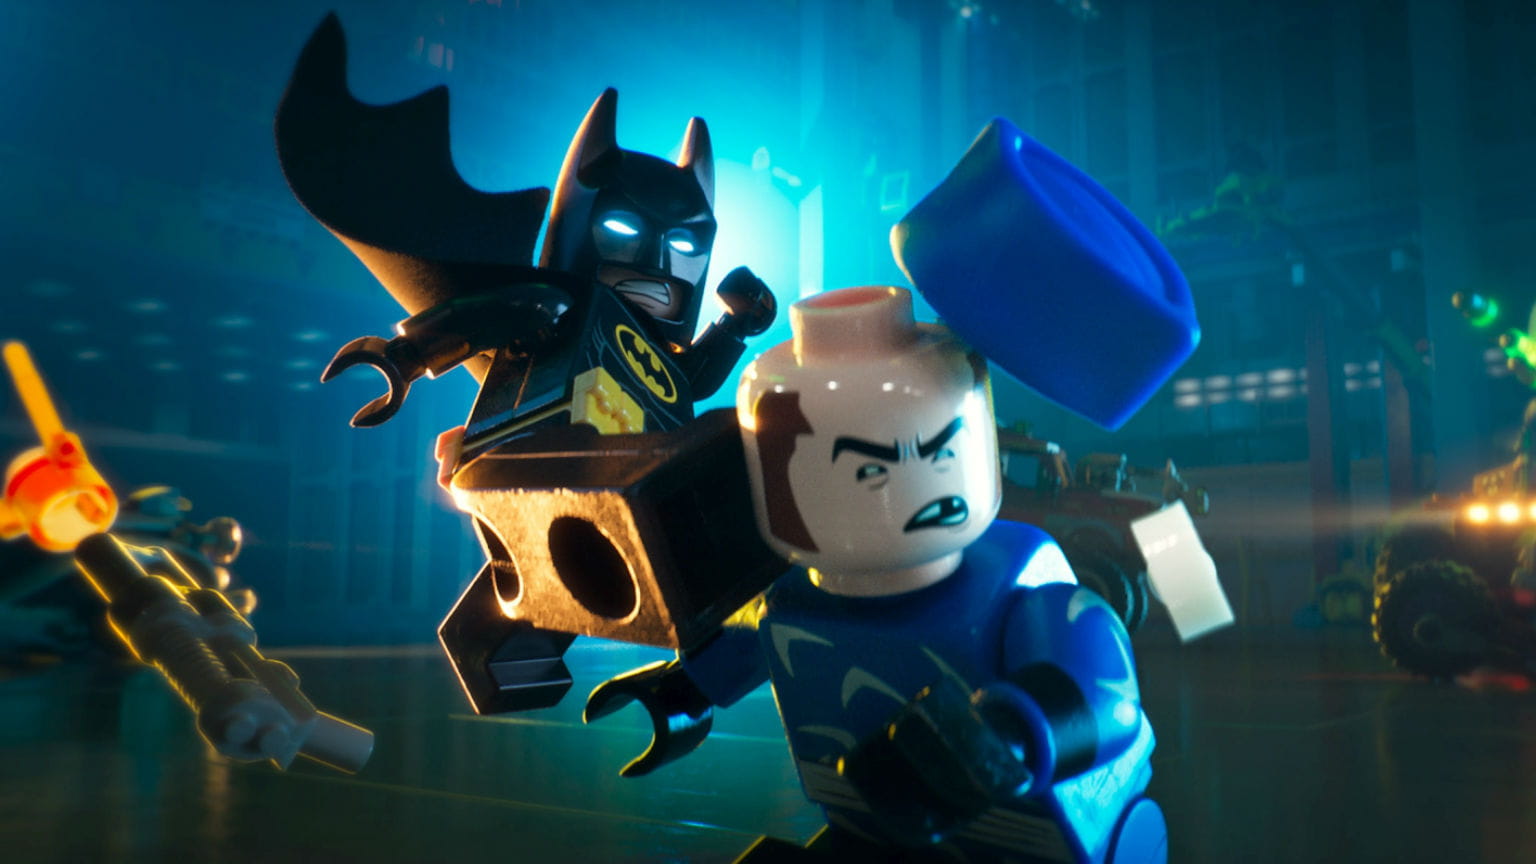 The LEGO Batman Movie director Chris McKay and producer Dan Lin